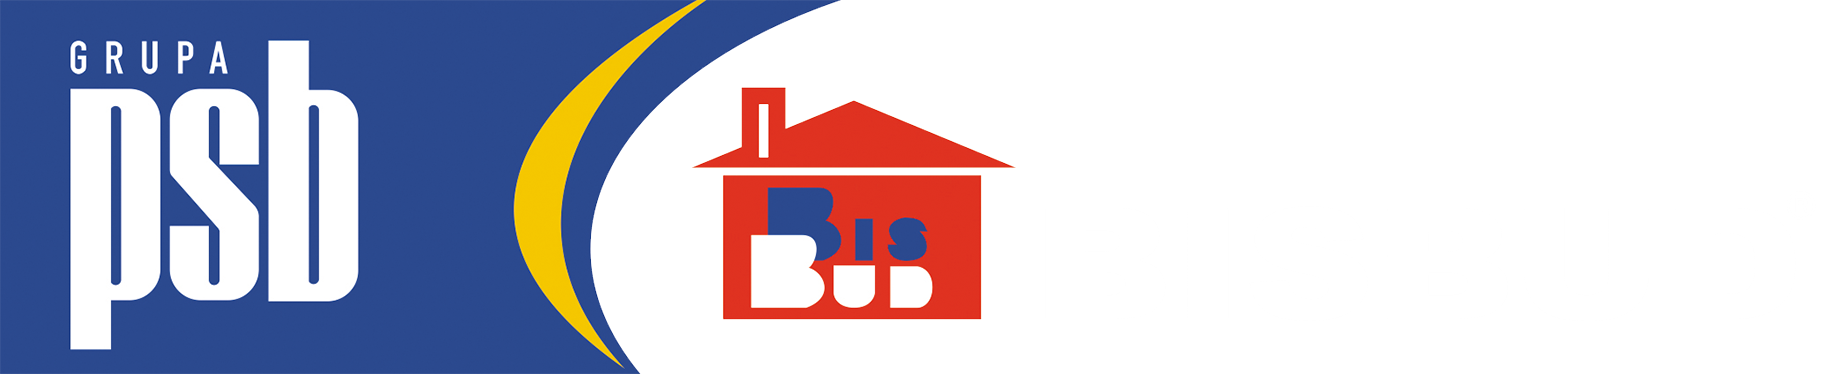 logo bisbud